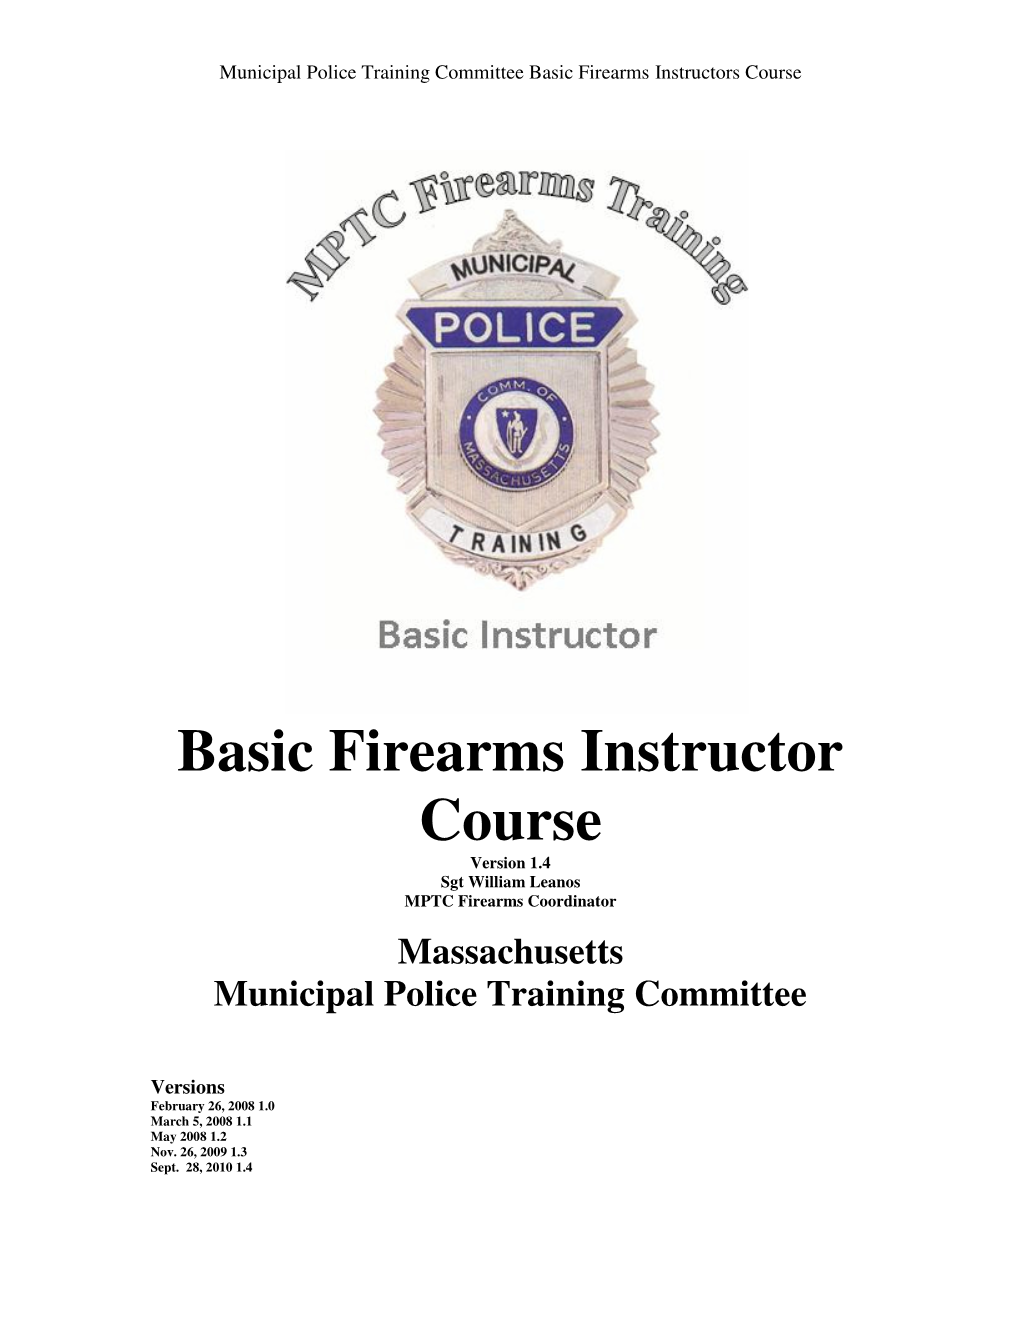 Basic Firearms Instructor Course Version 1.4 Sgt William Leanos MPTC Firearms Coordinator